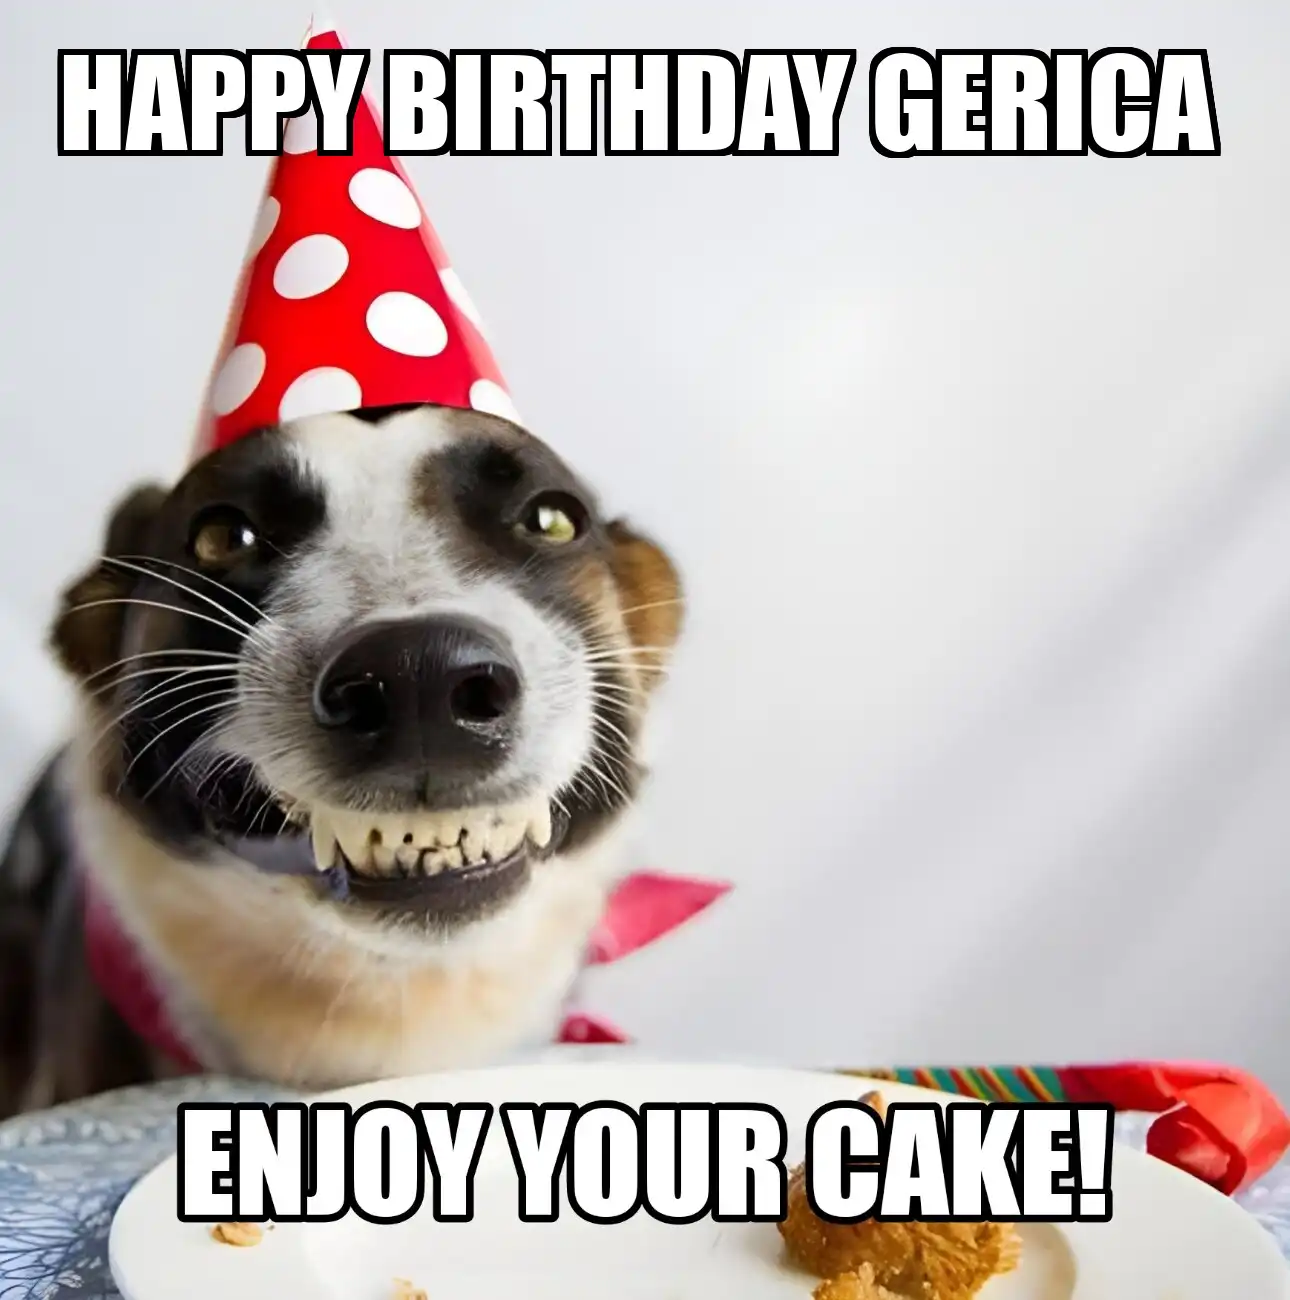 Happy Birthday Gerica Enjoy Your Cake Dog Meme